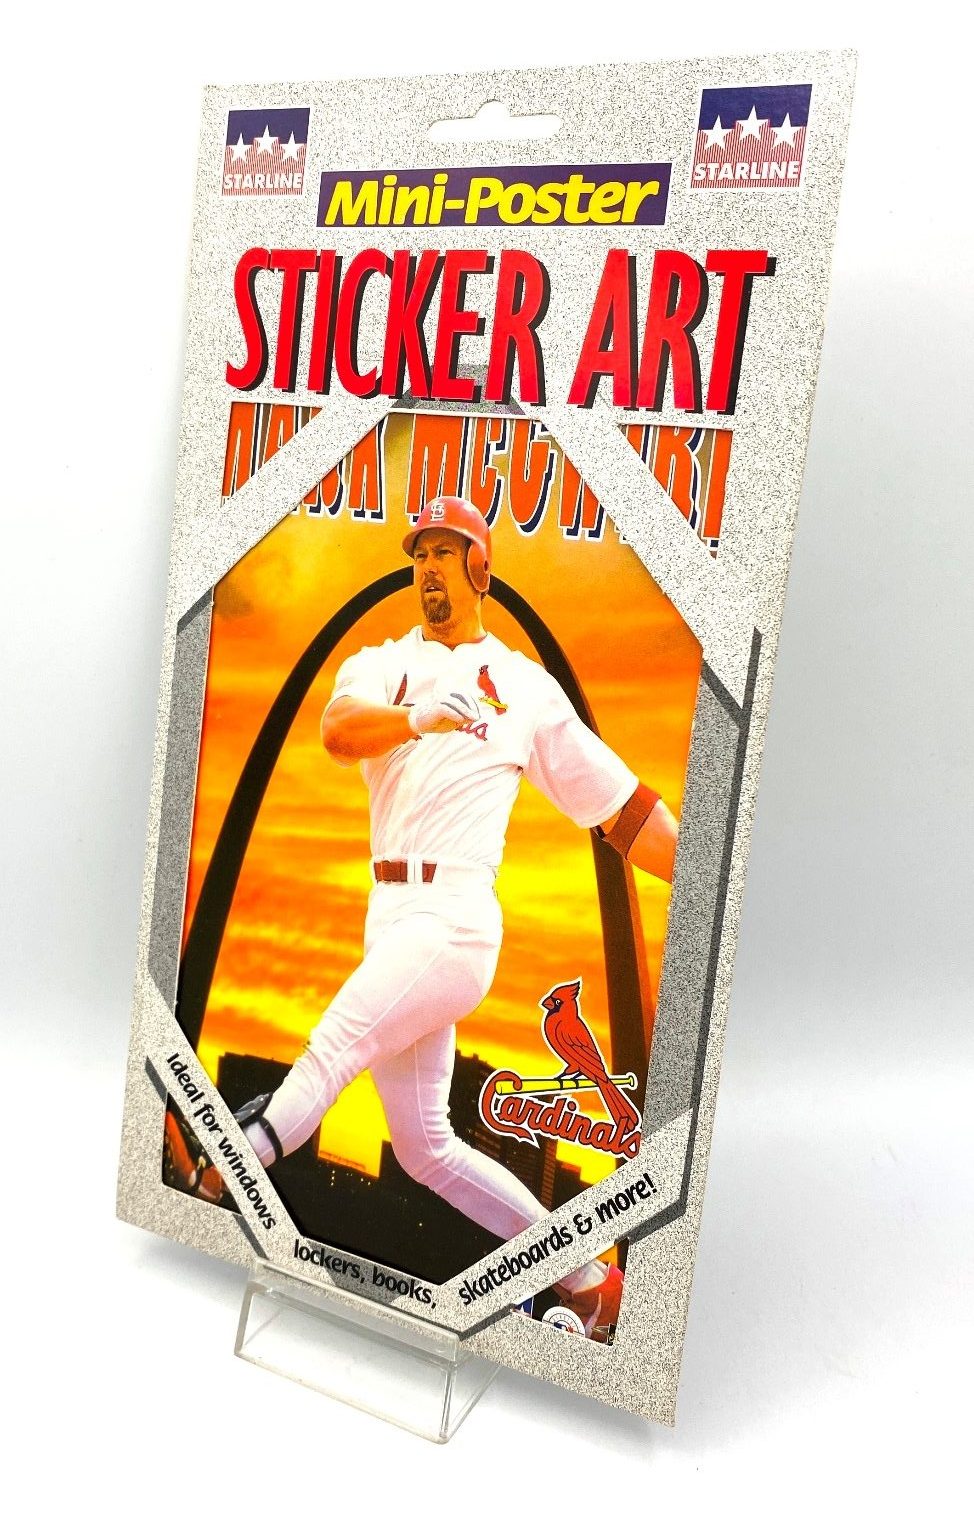 1998 Mark McGwire MLB (Cardinals-Jersey #25 Mini-Poster Sticker Art) (4)